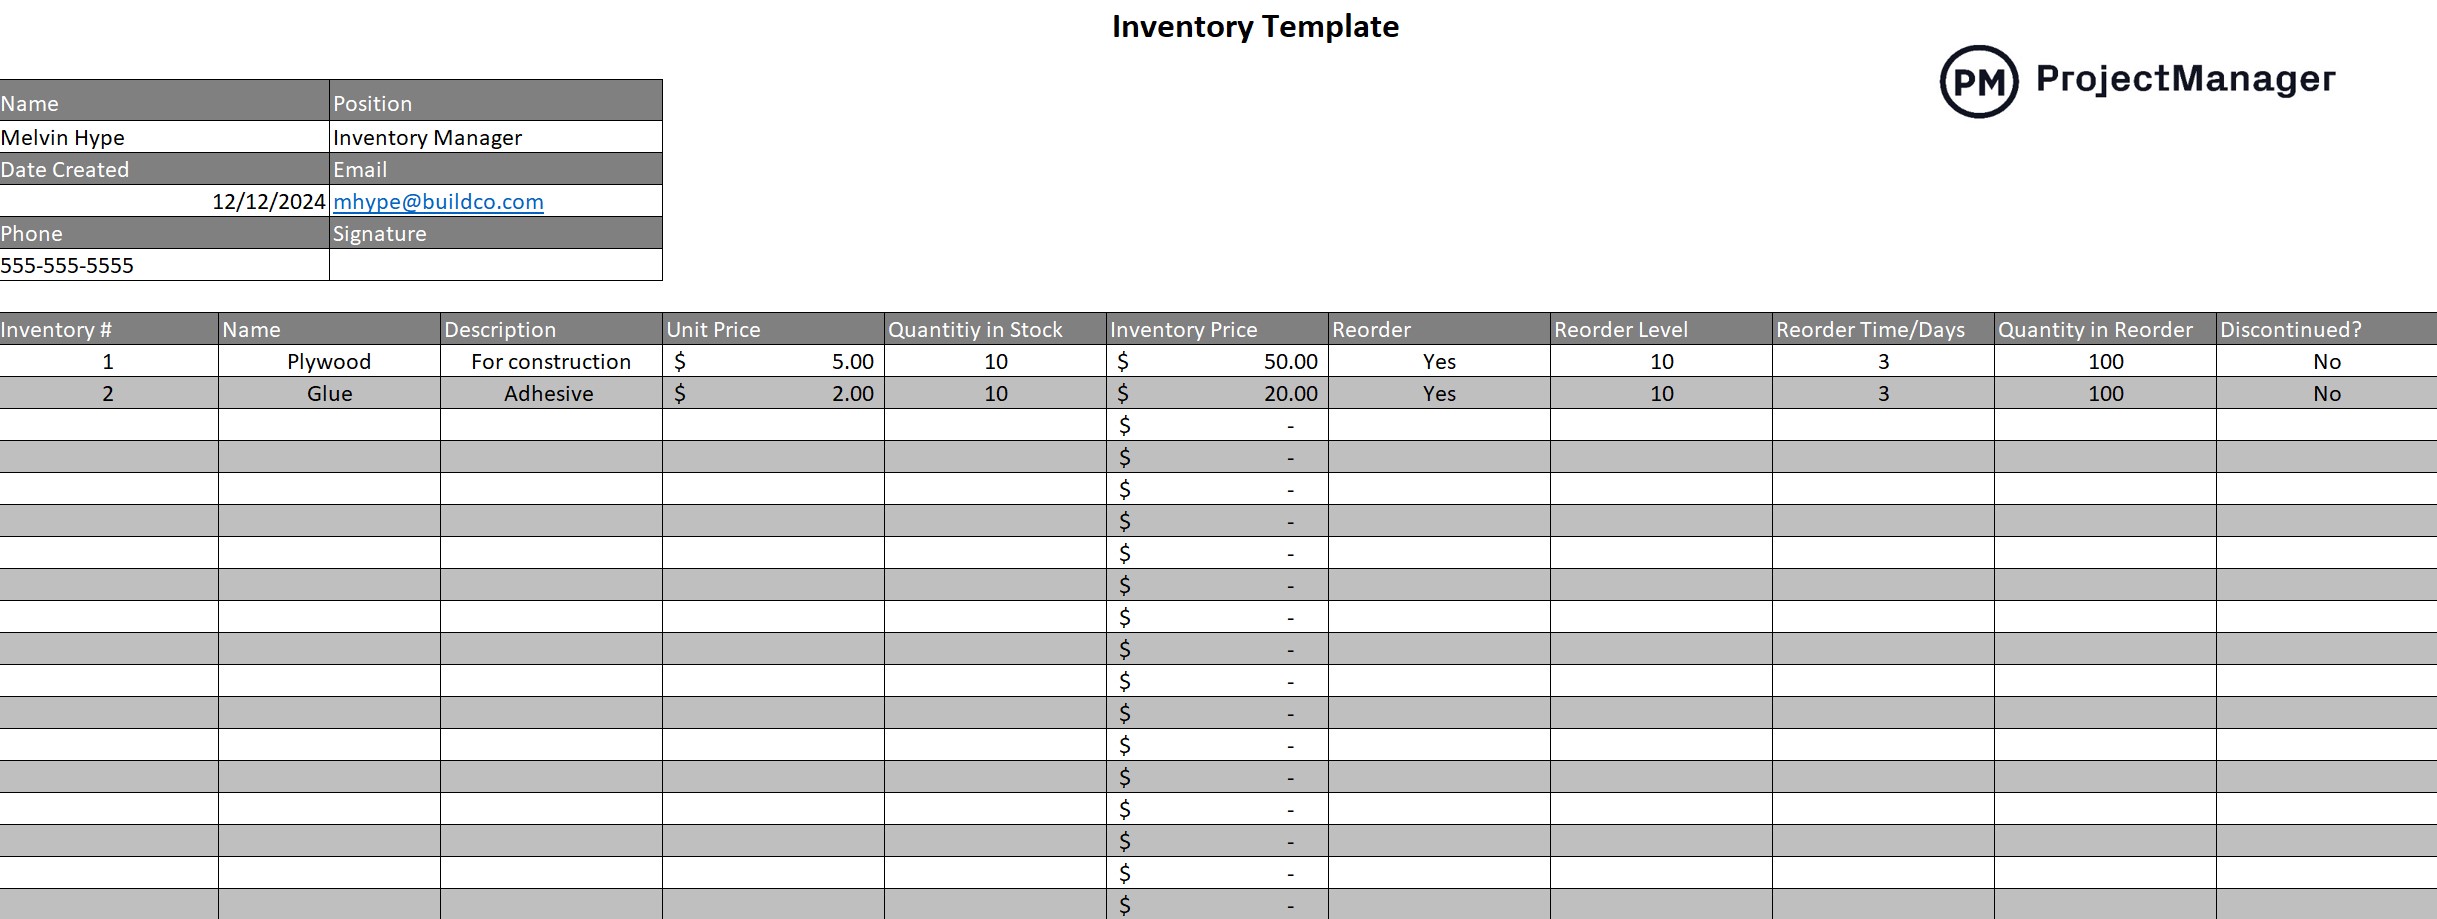 ProjectManager's inventory management screenshot